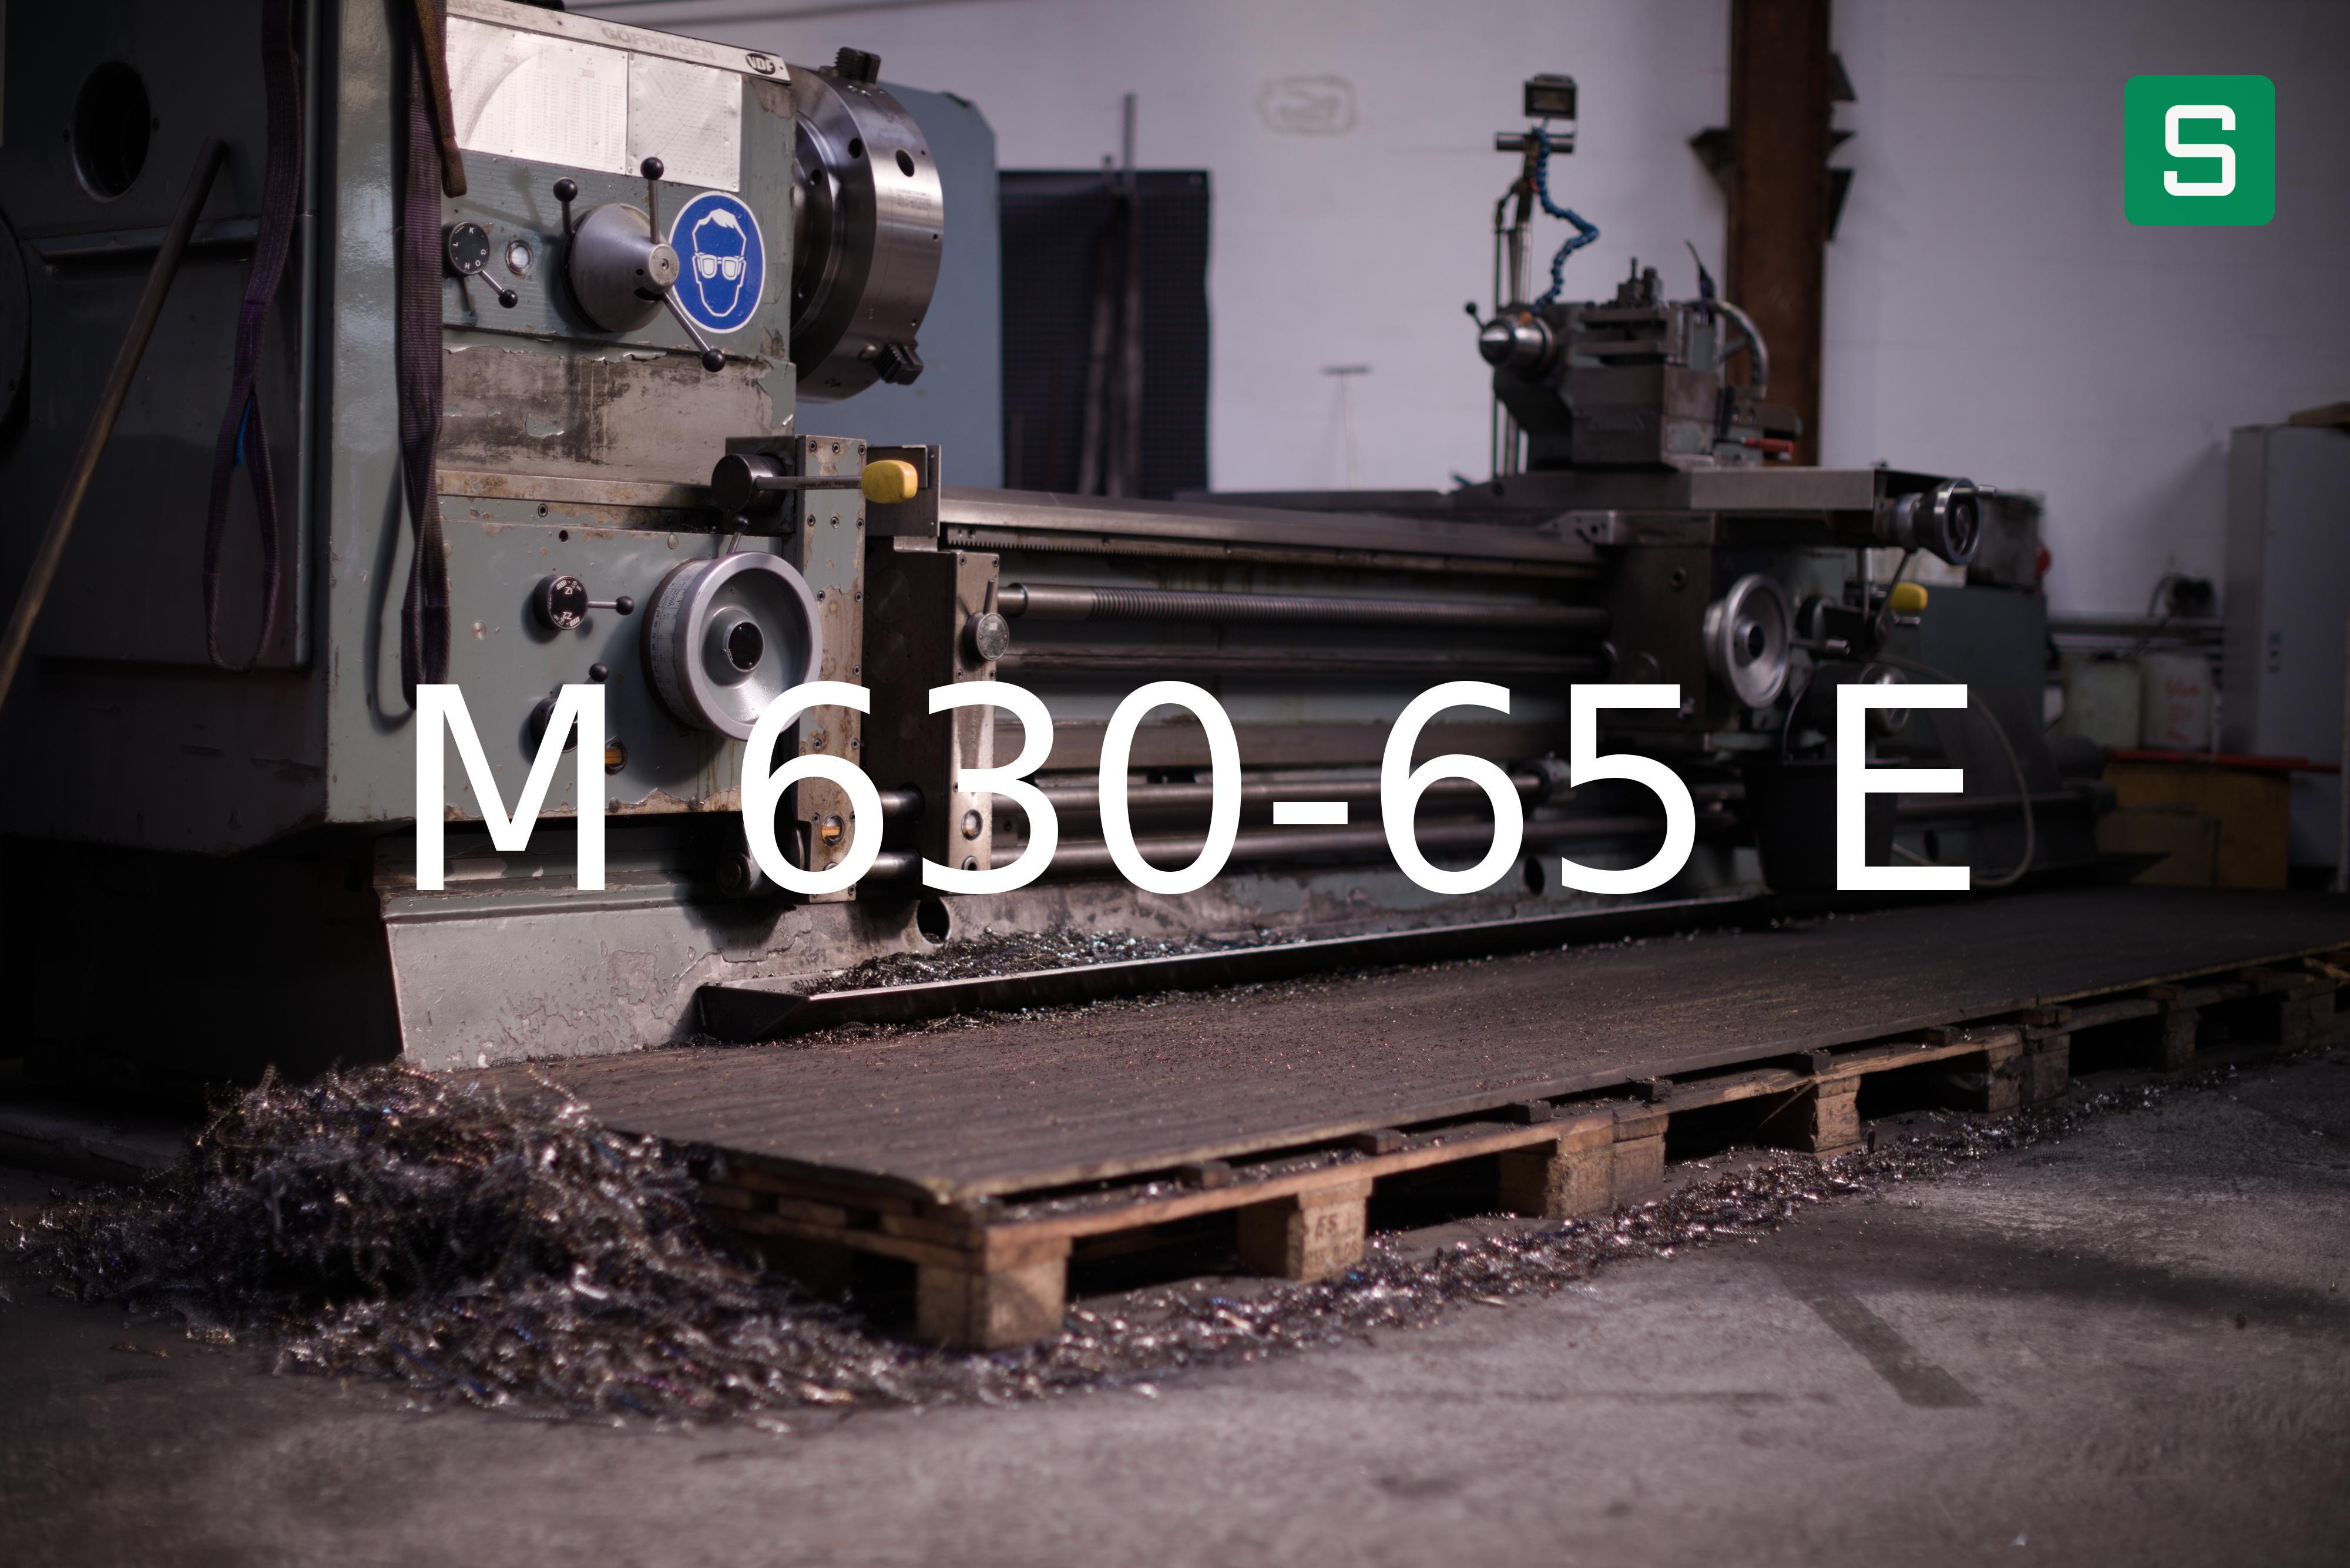 Steel Material: M 630-65 E